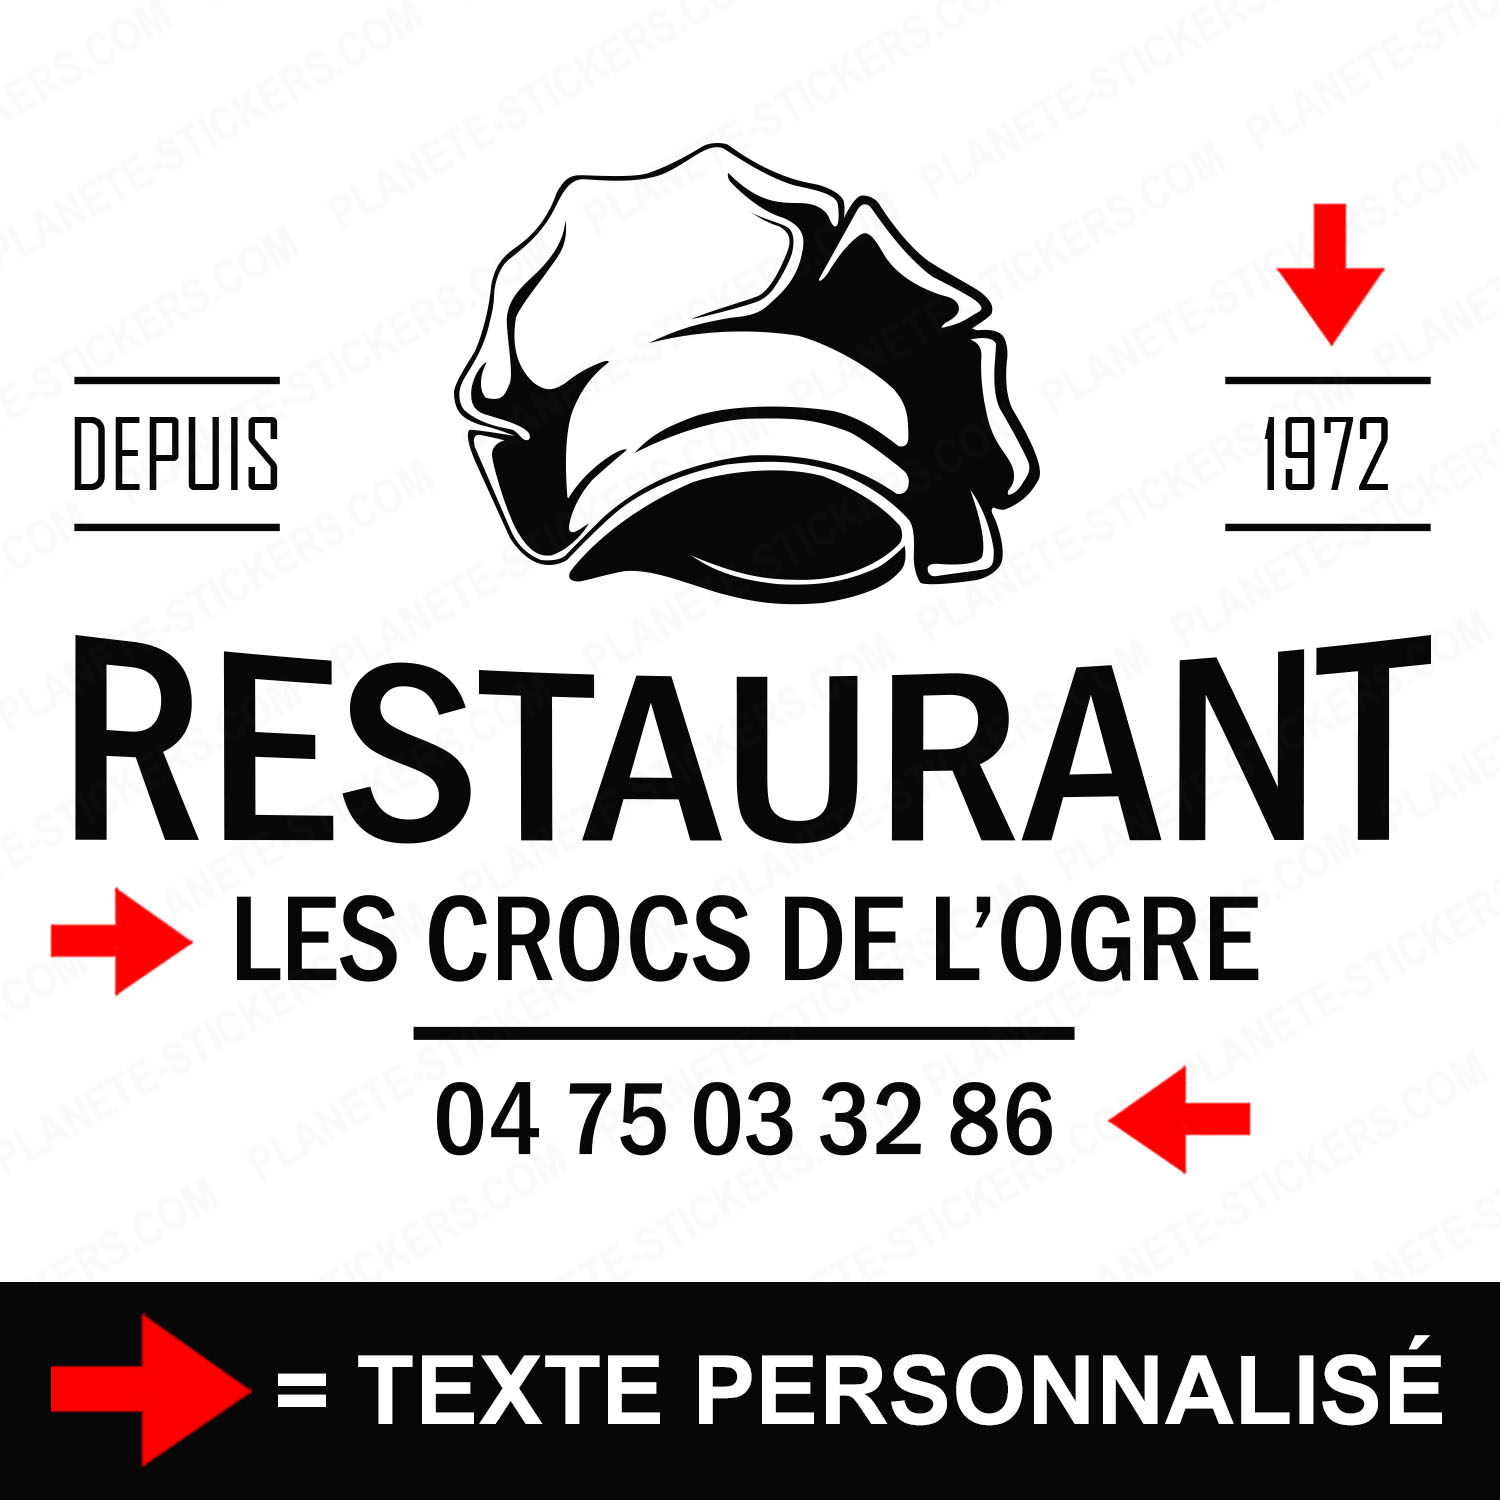 ref14restaurantvitrine-stickers-restaurant-vitrine-restaurant-sticker-personnalisé-autocollant-pro-restaurateur-vitre-resto-professionnel-logo-toque-2